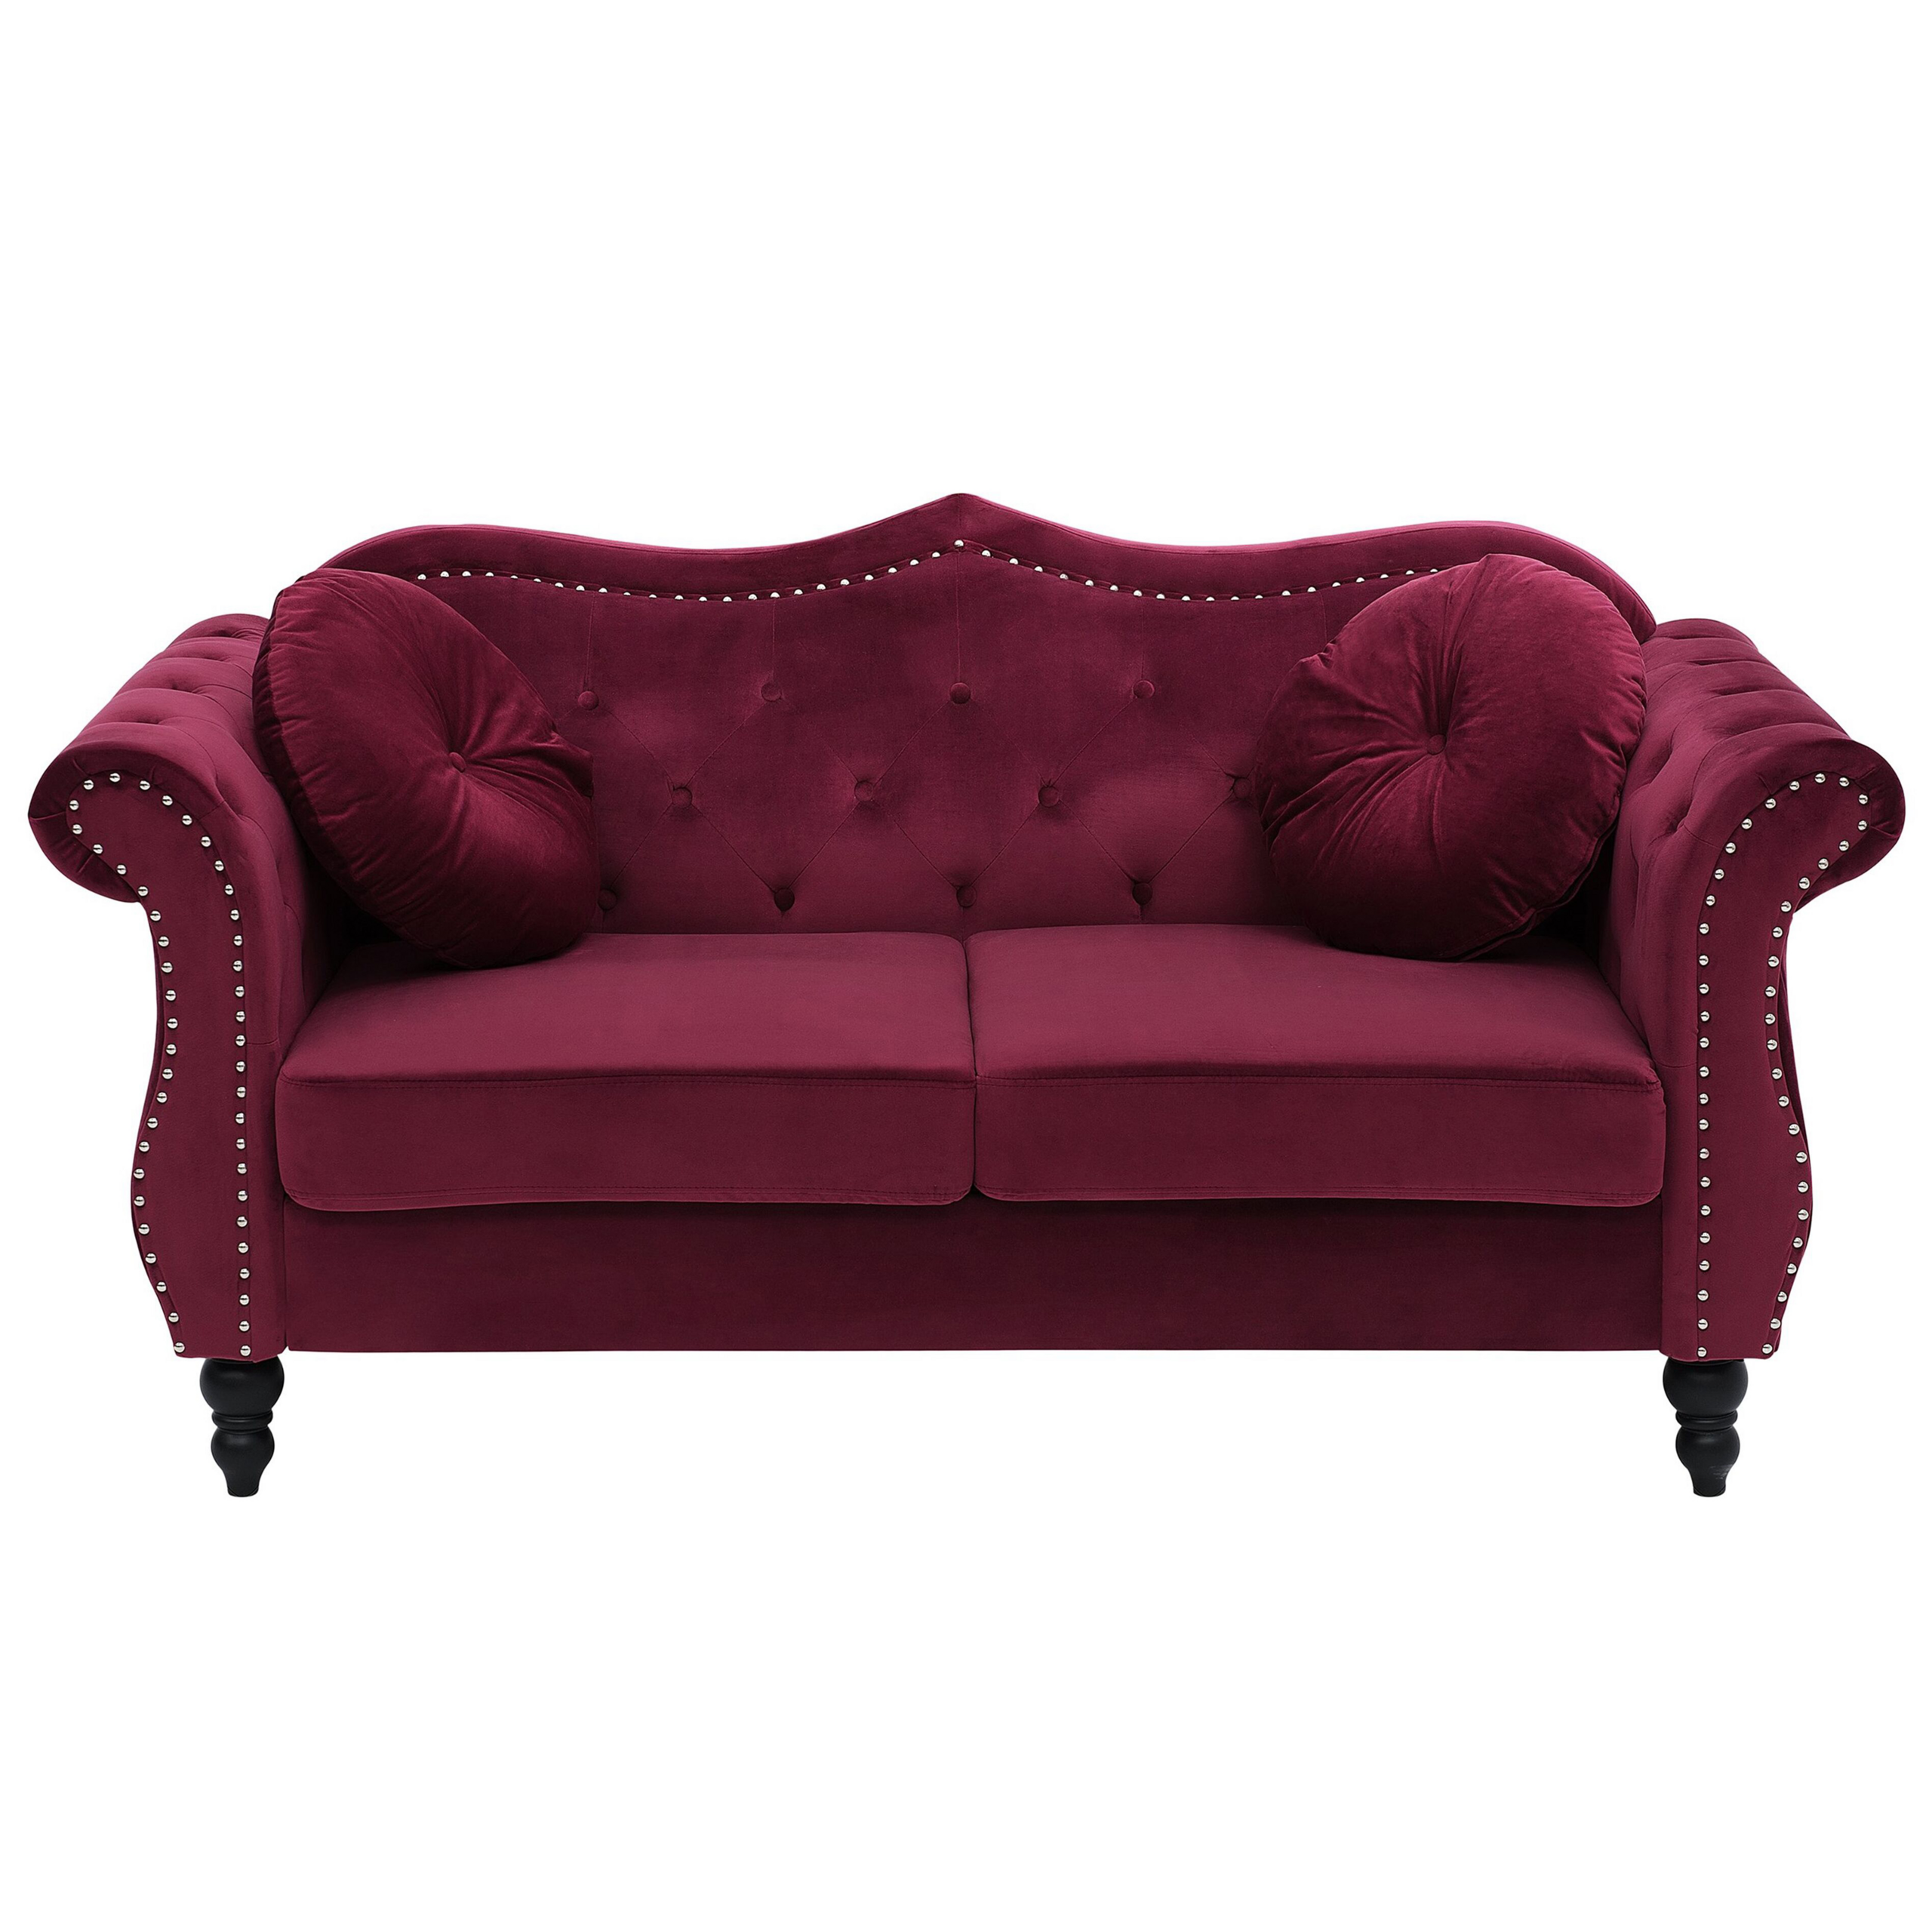 Beliani Sofa Red Velvet 2 Seater Nailhead Trim Button Tufted Throw Pillows Rolled Arms Glam